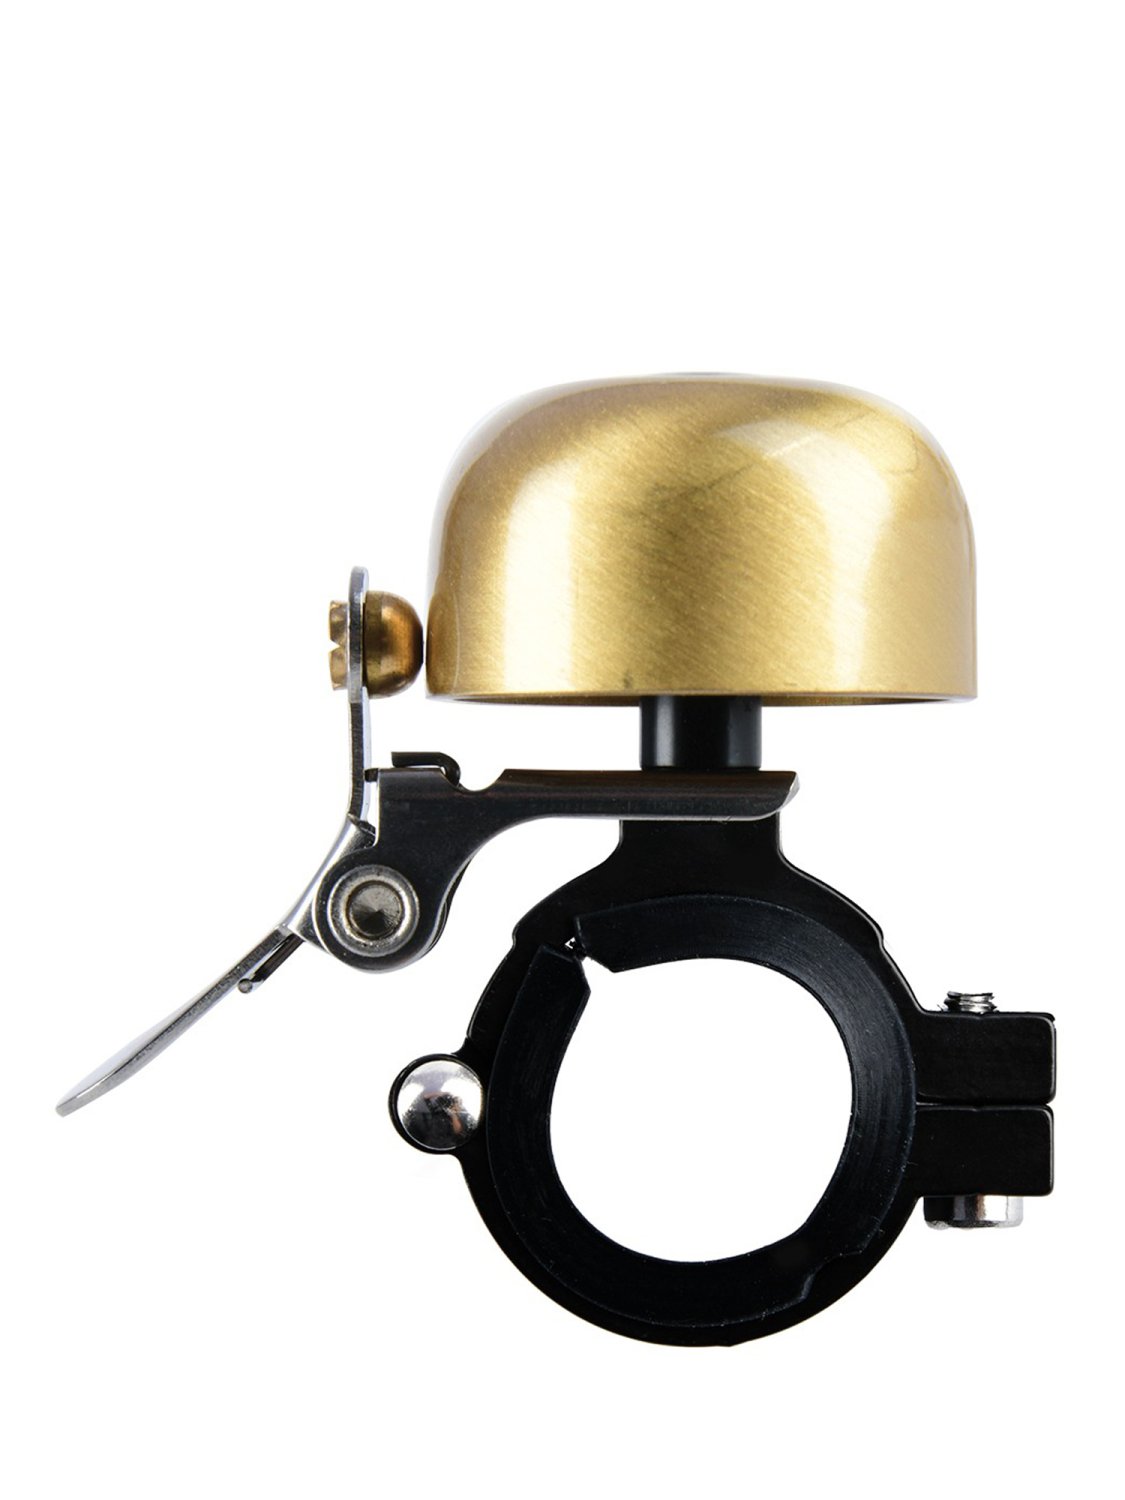 Звонок велосипедный Oxford Mini Ping Brass Bell Gold б/р, BE157G звонок фонарик велосипедный globber mini buzzer зеленый 530 106